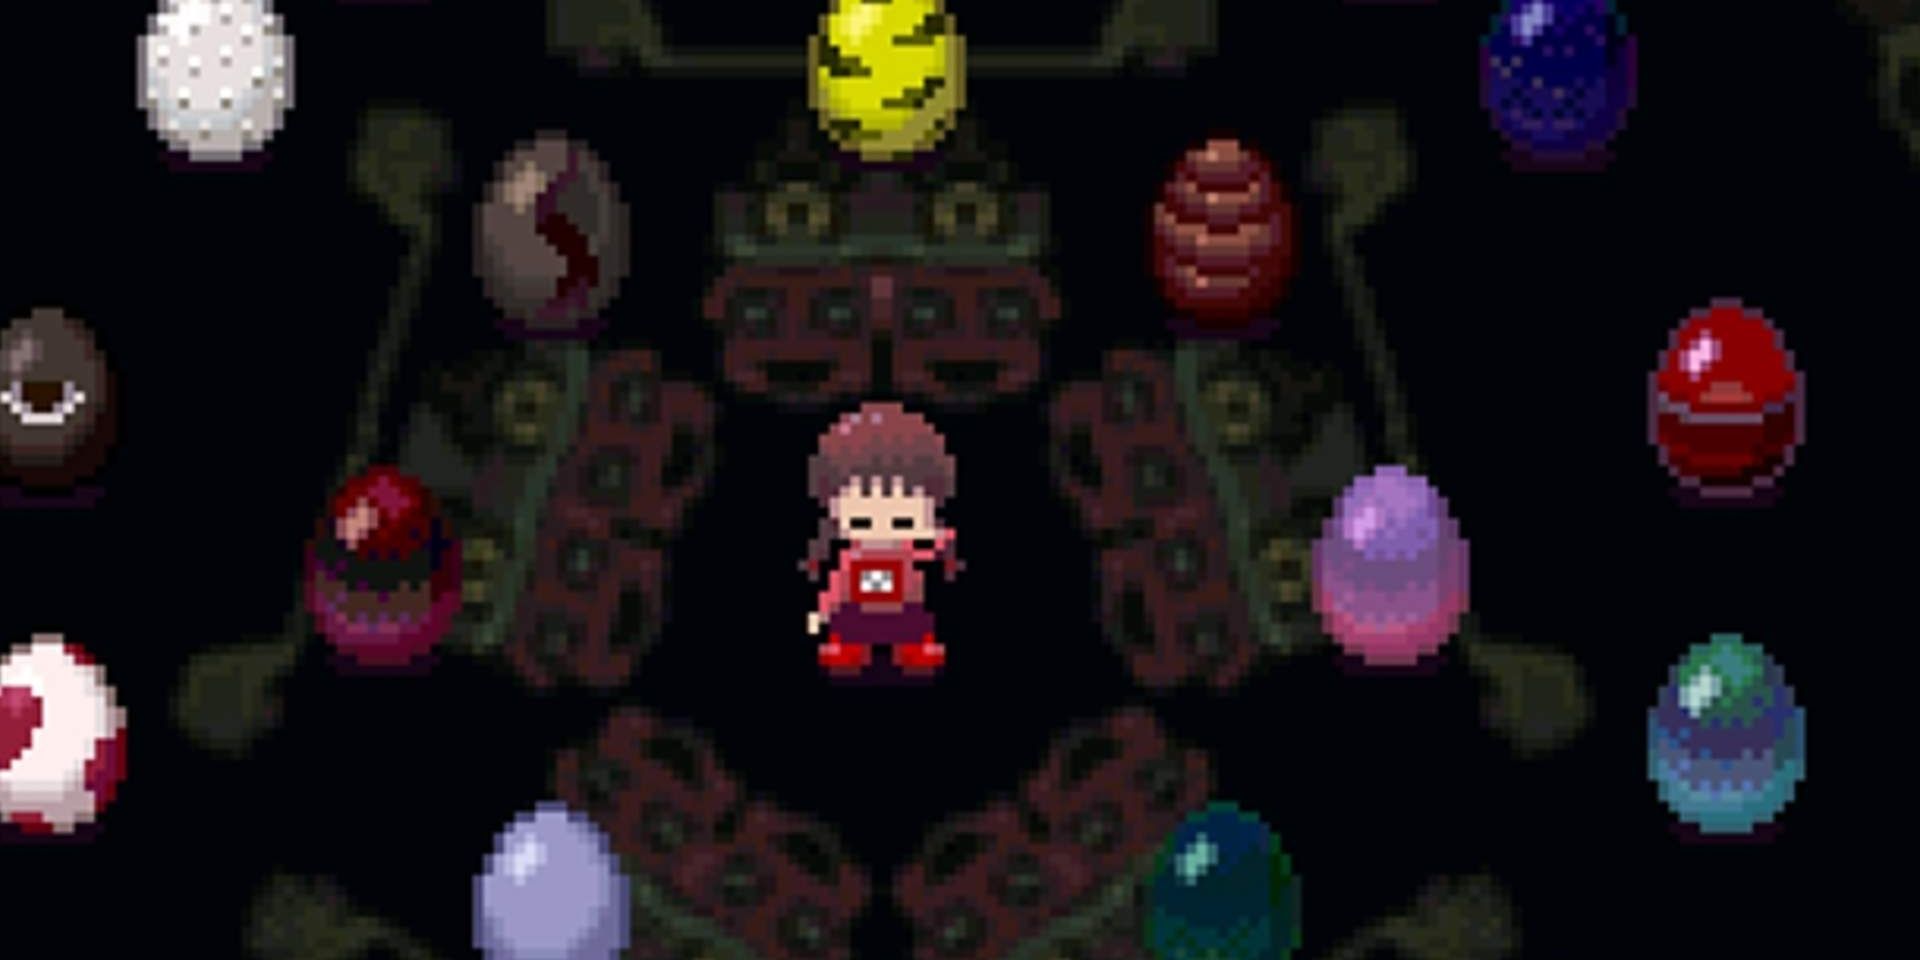 Yume Nikki gameplay screenshot character surrounded by eggs